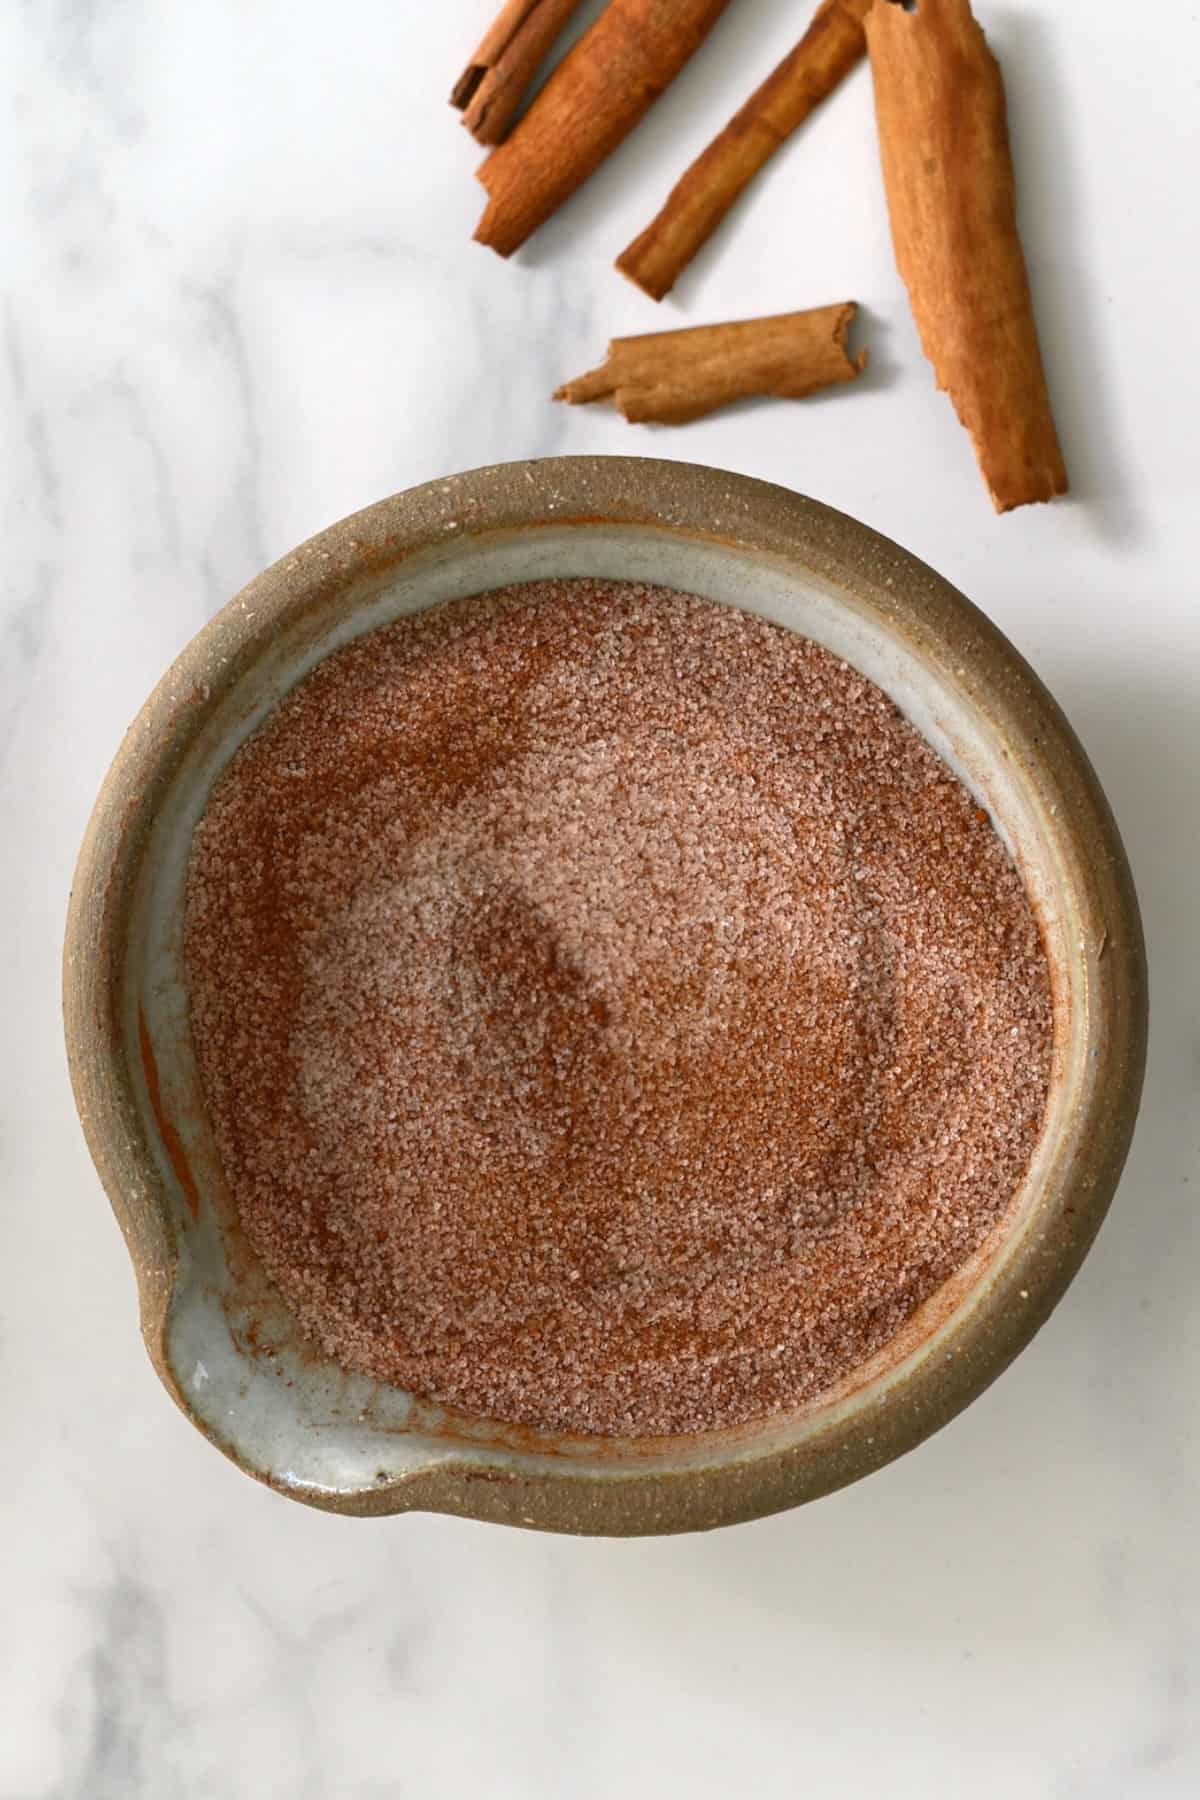 A bowl with homemade cinnamon sugar